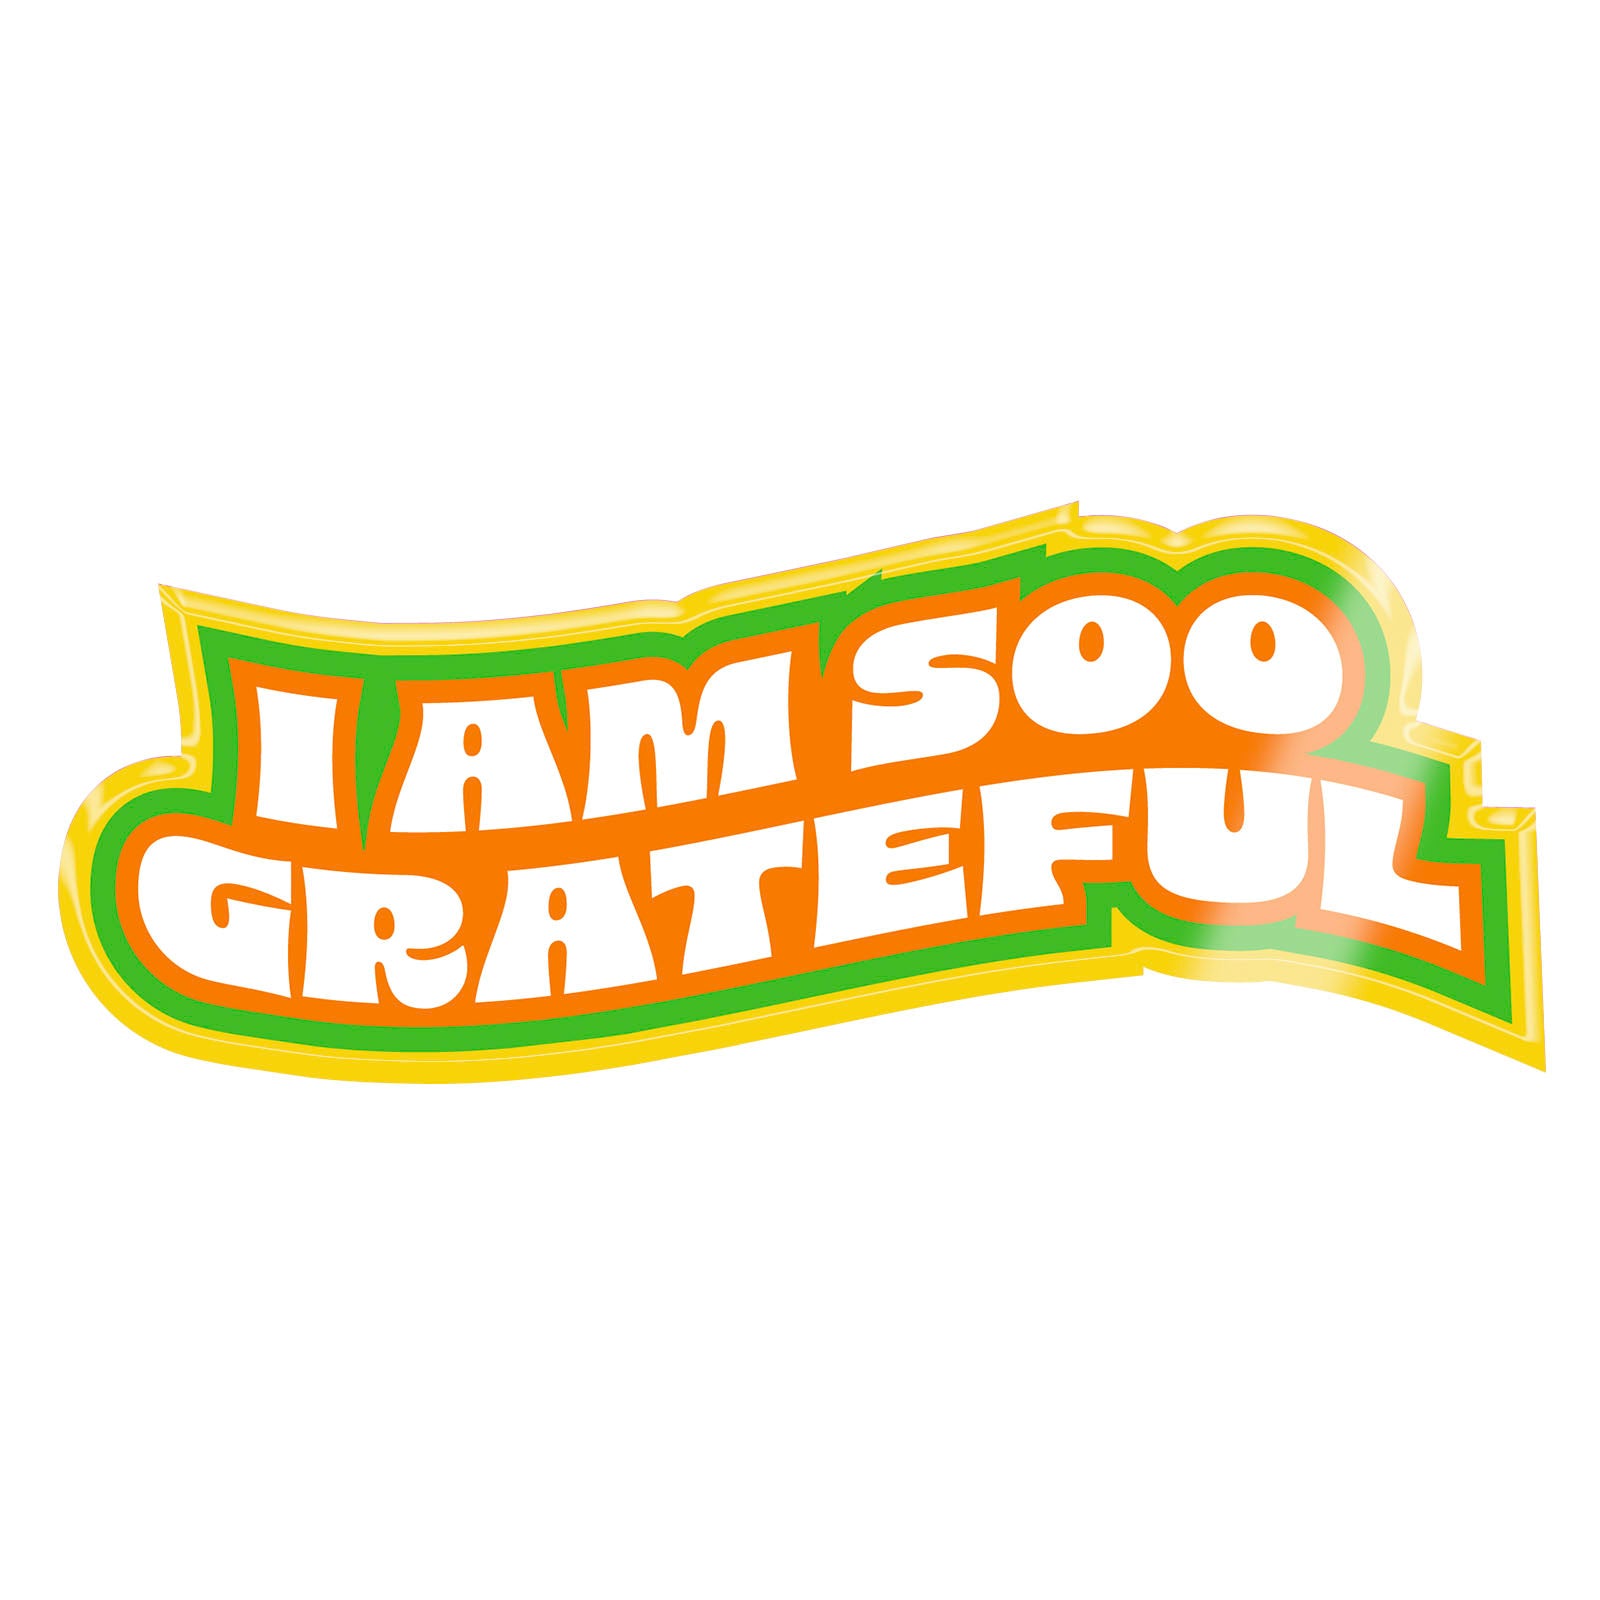 Soo Grateful Vinyl Sticker